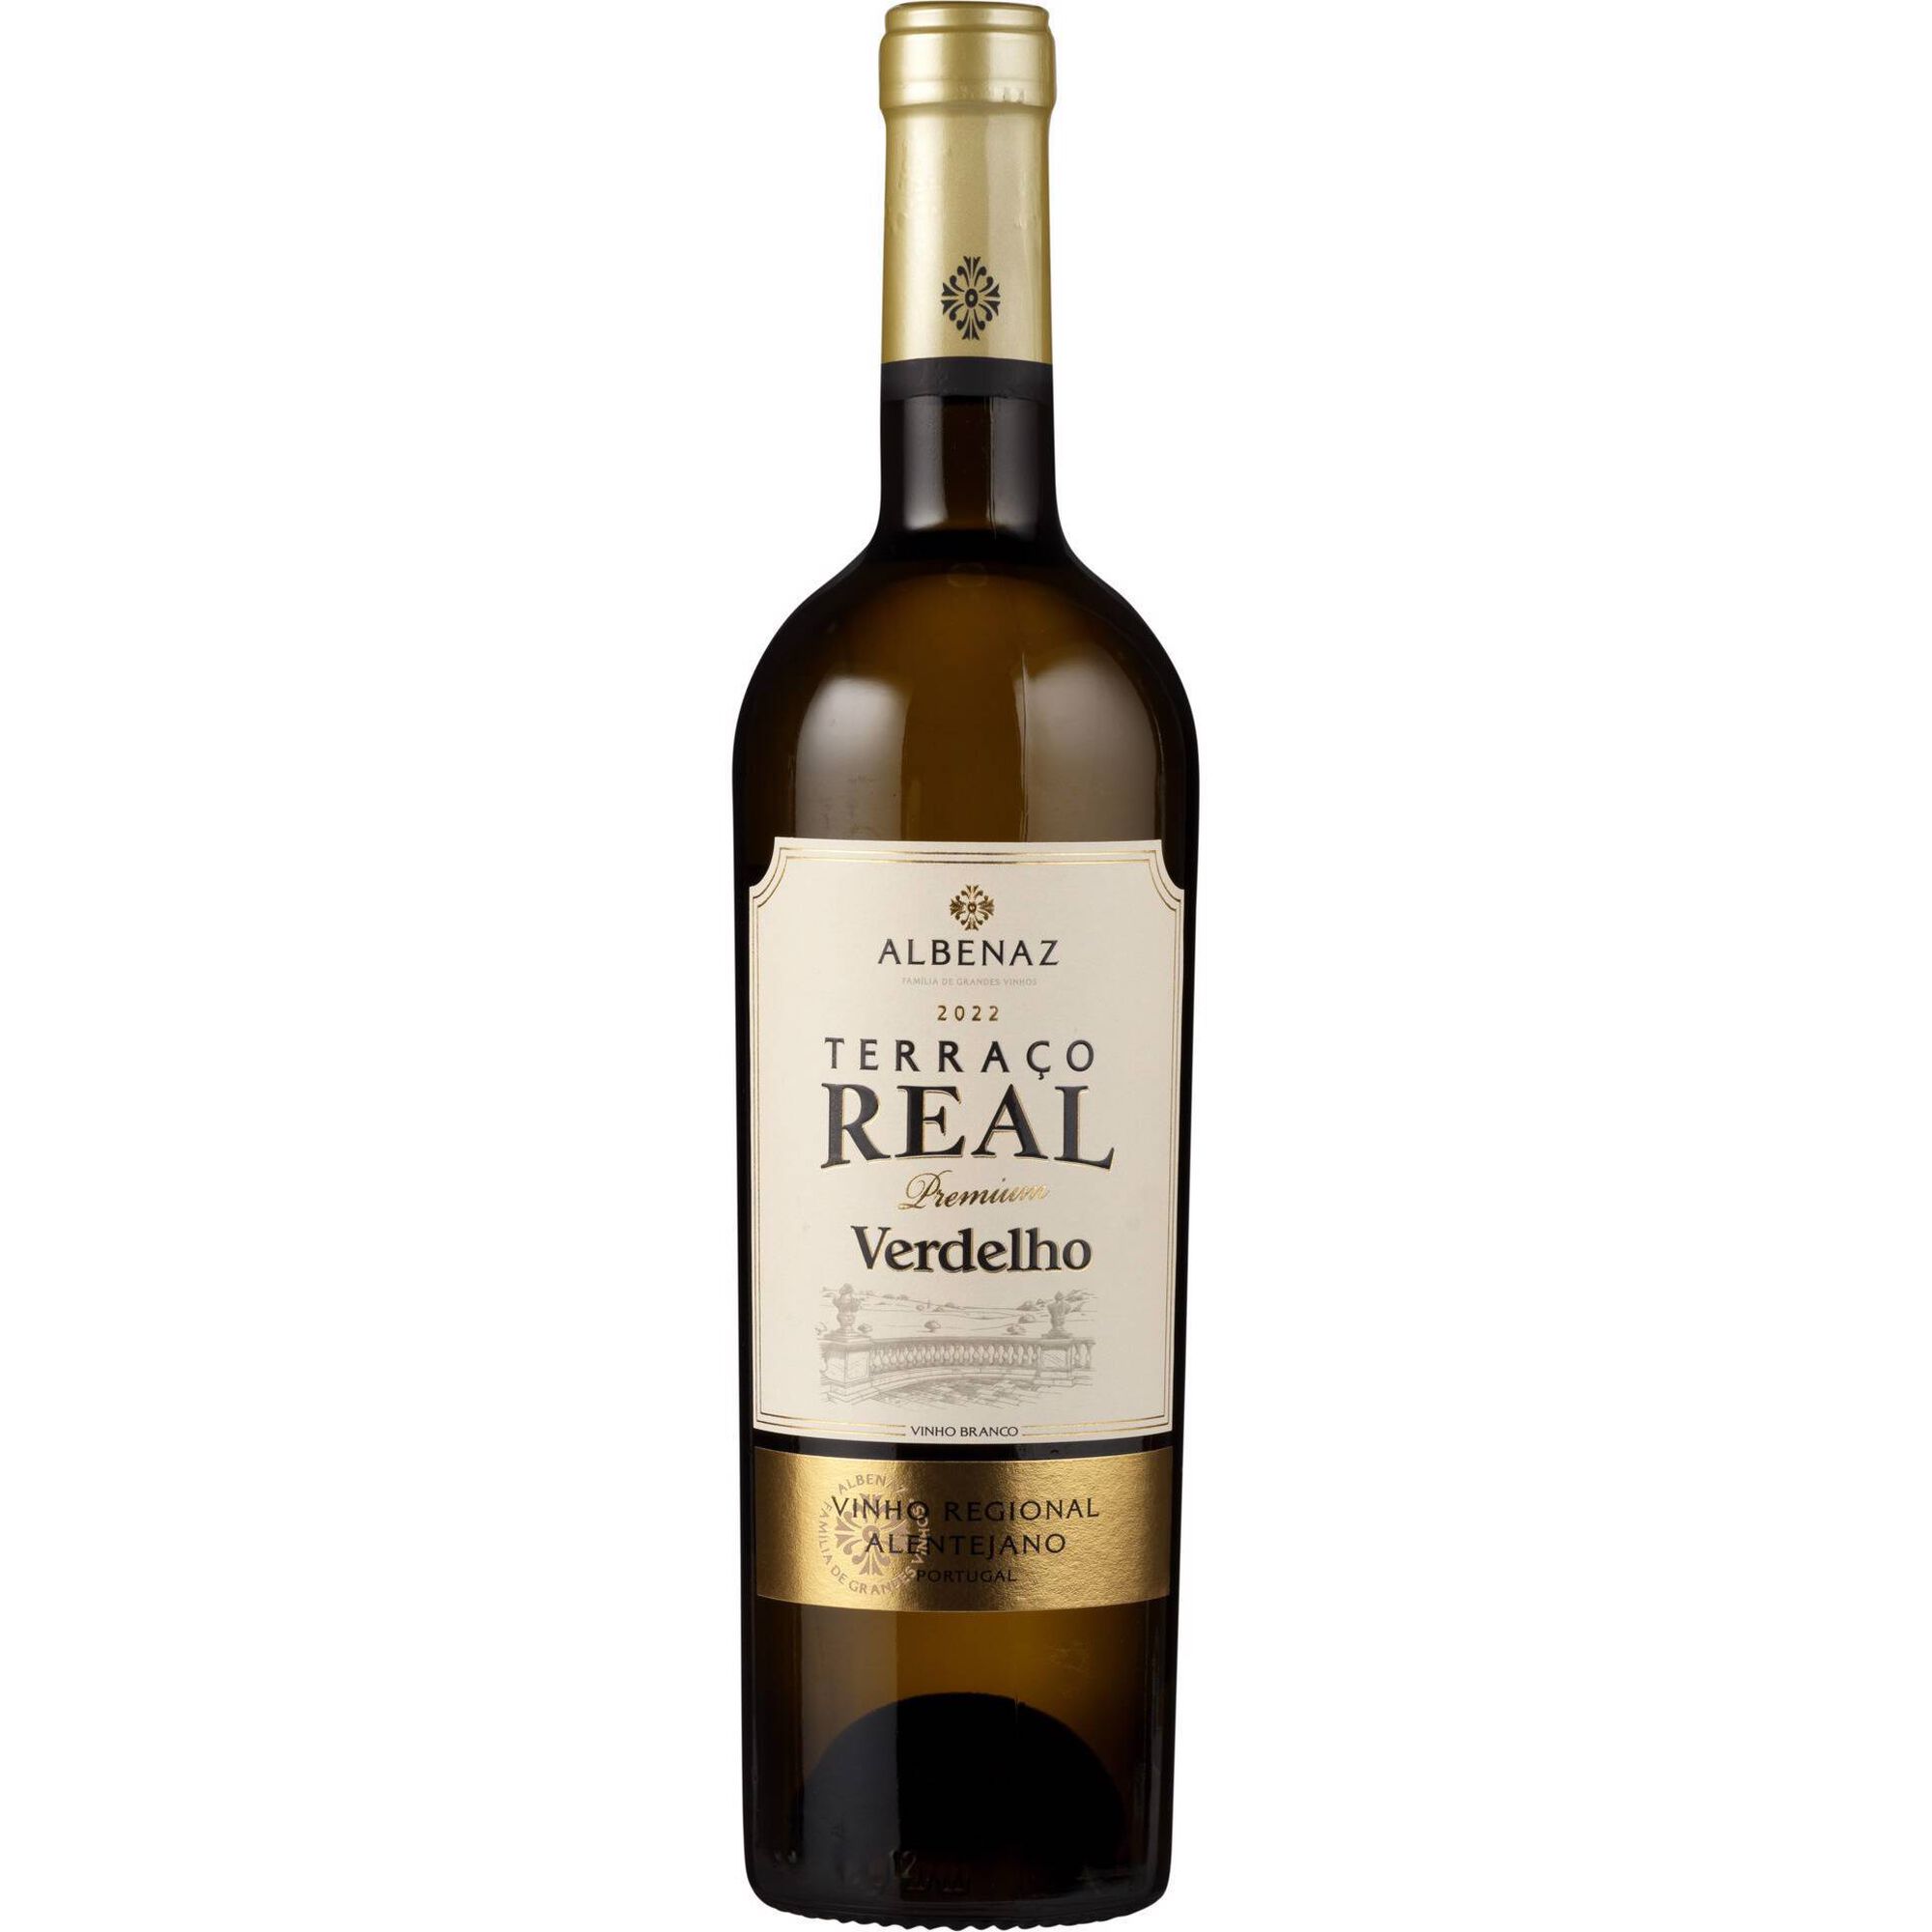 Albenaz Terraço Real Verdelho Premium Regional Alentejano Vinho Branco